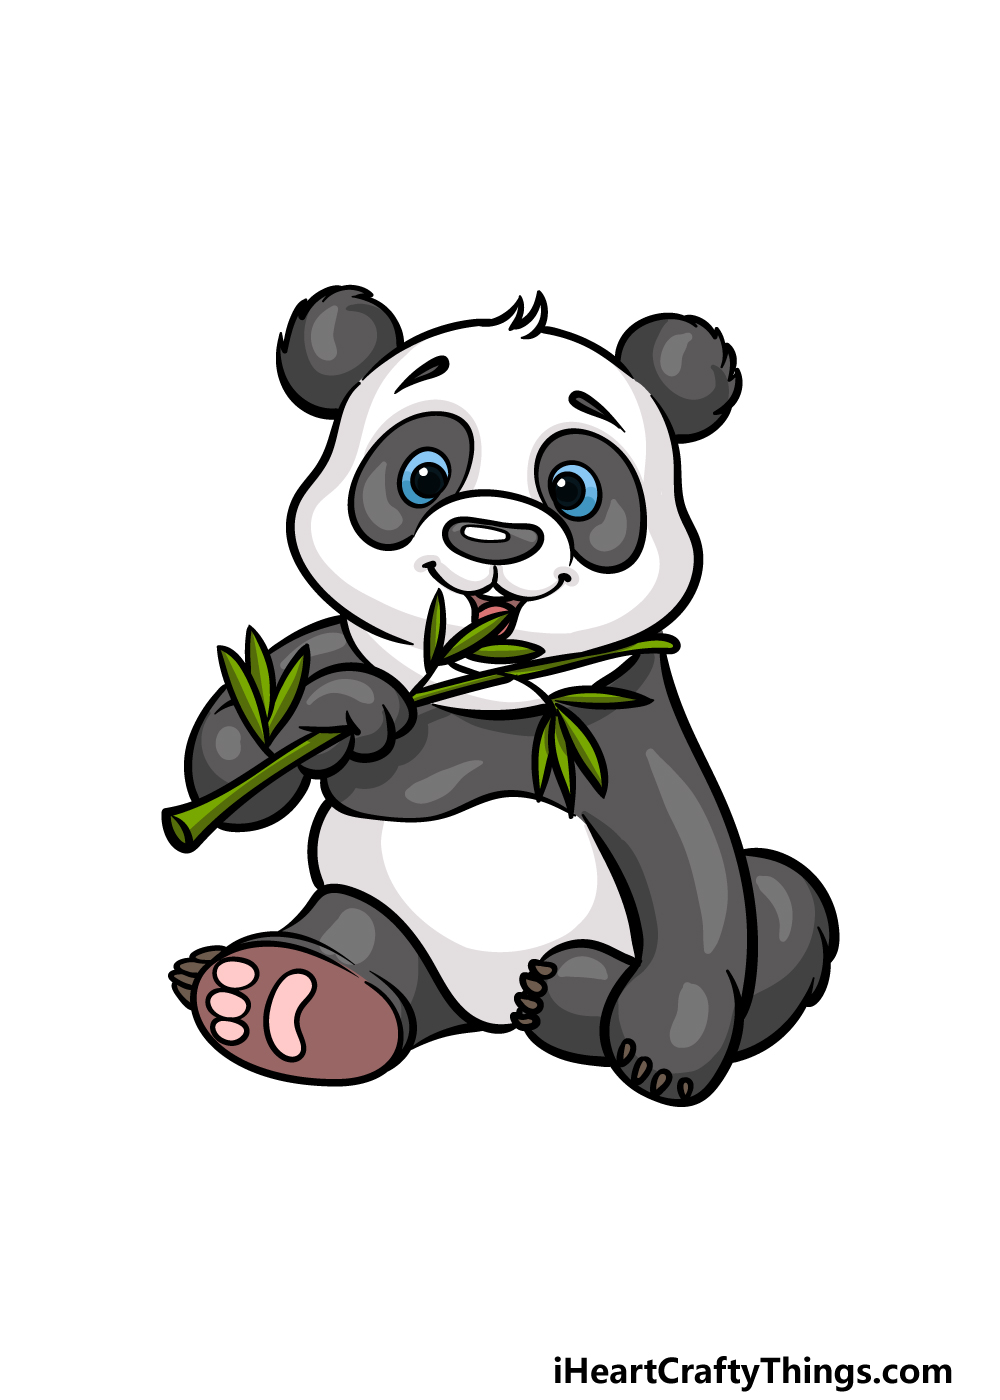 Panda Bear Drawing - How To Draw Panda Bear Step By Step